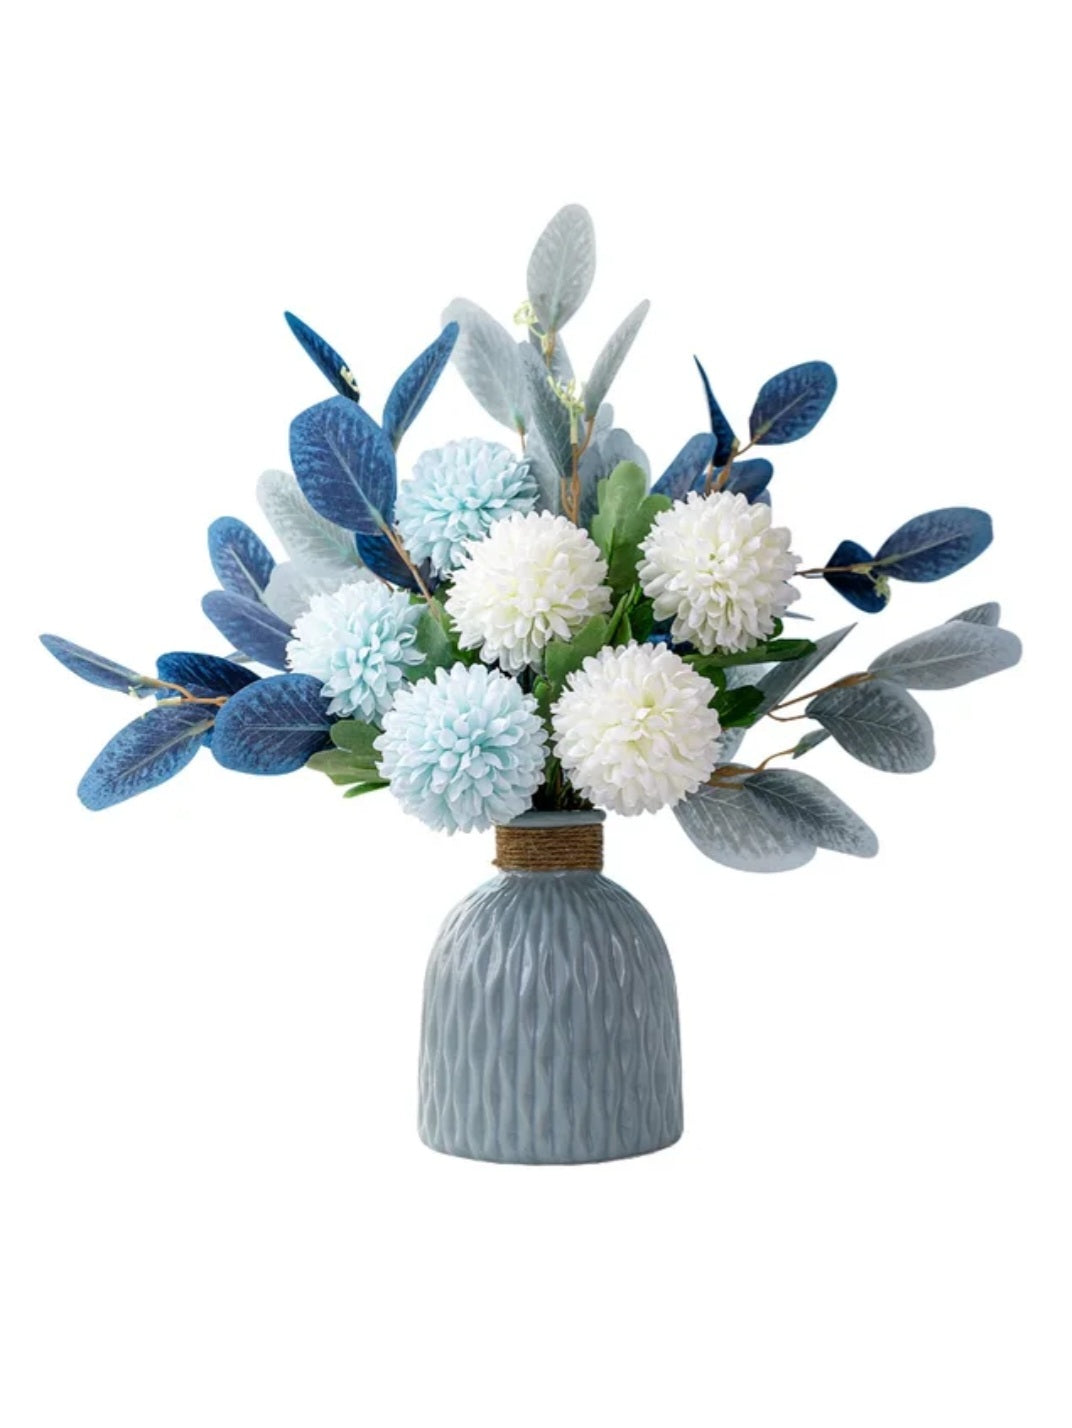 Beautiful Blue flower centre piece for home office decor